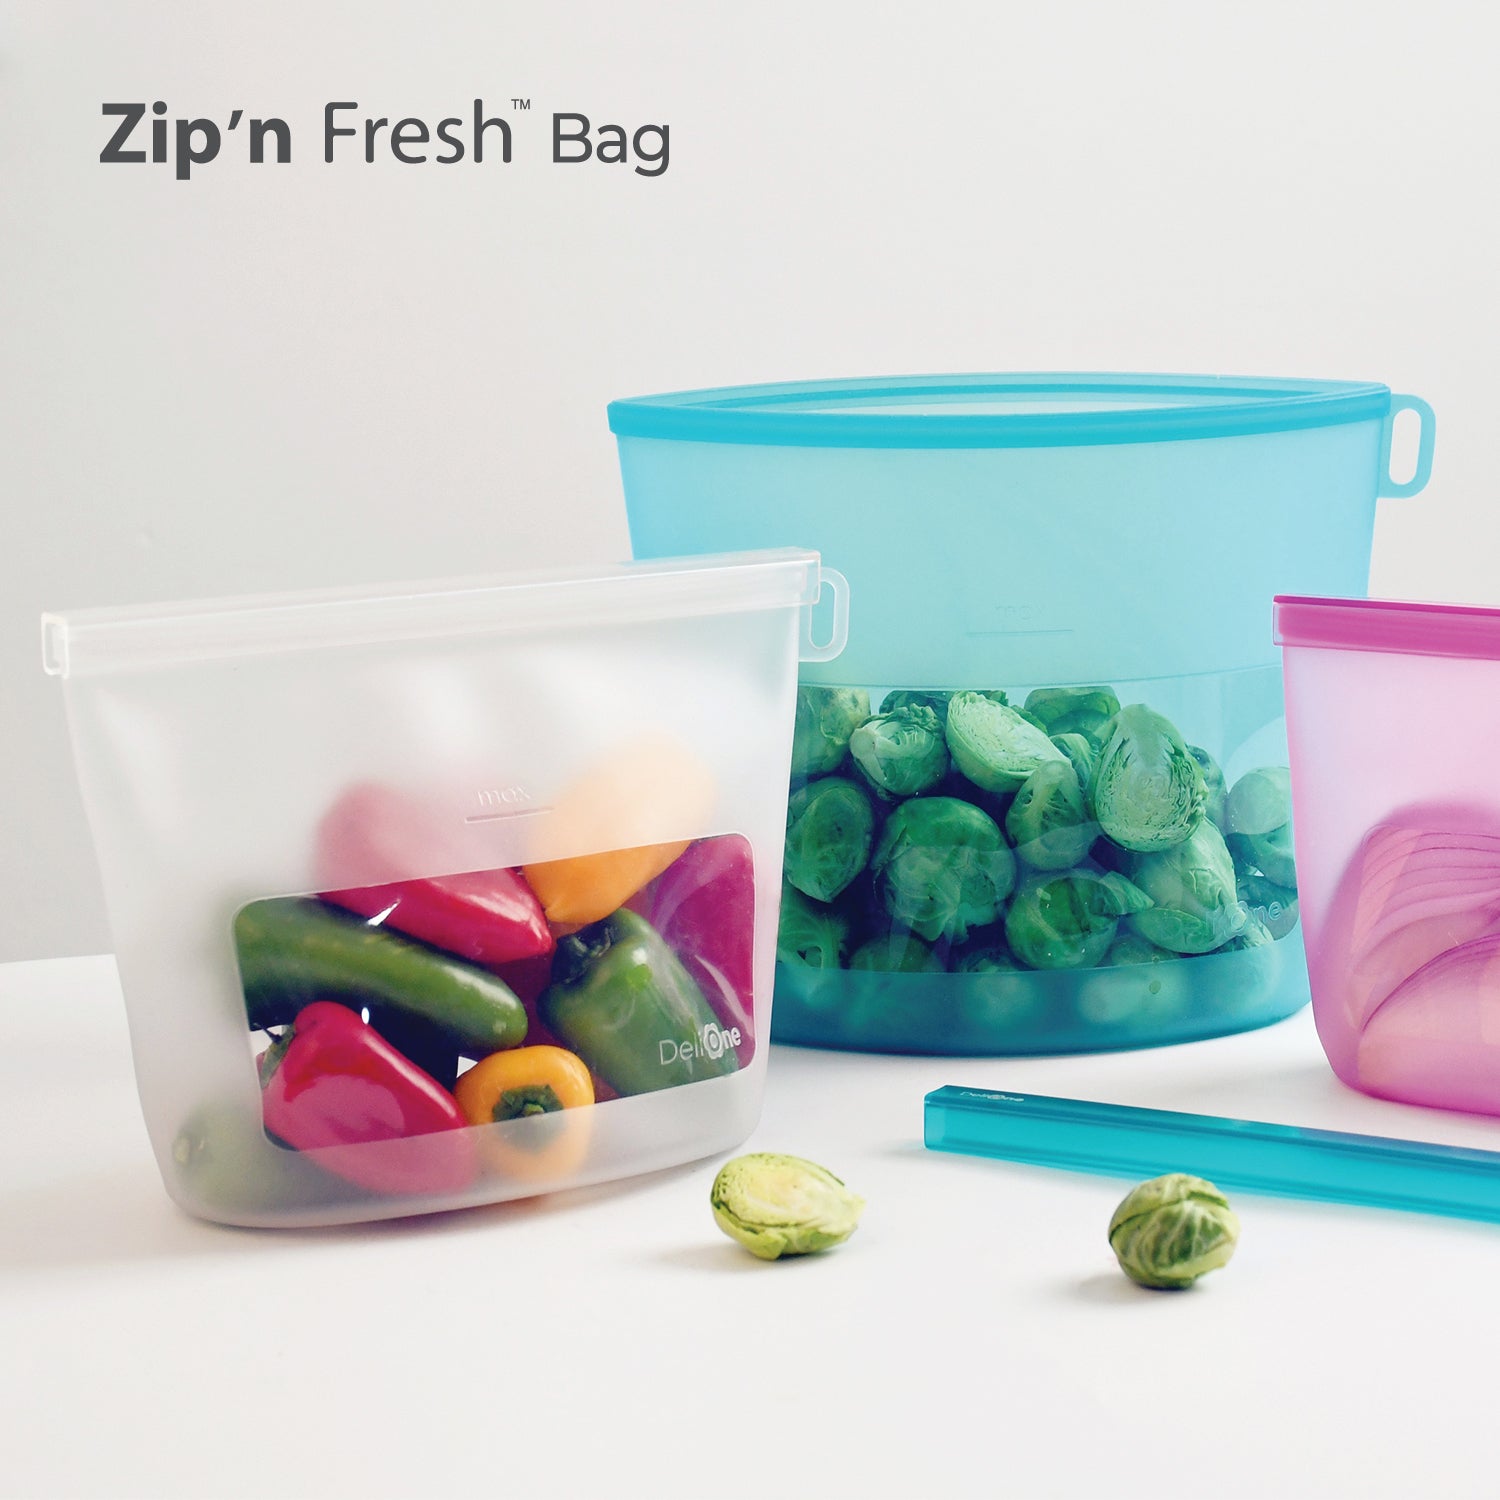 Delione Zip'n Fresh Silicone Food Storage Bag Set of 7 / Clear